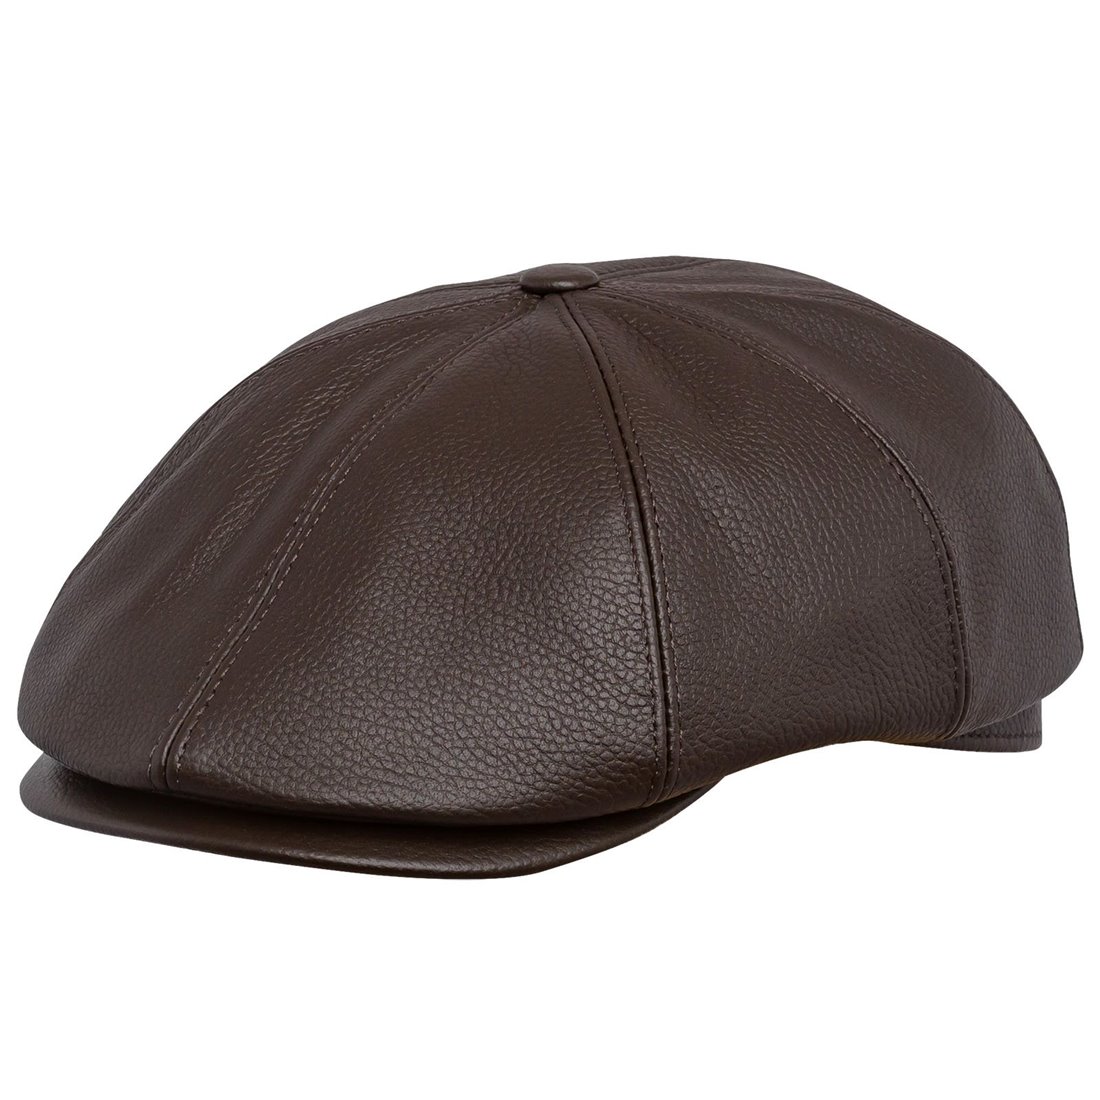 Tony - genuine leather flat cap with 8 panels crown, baseball men caps ...